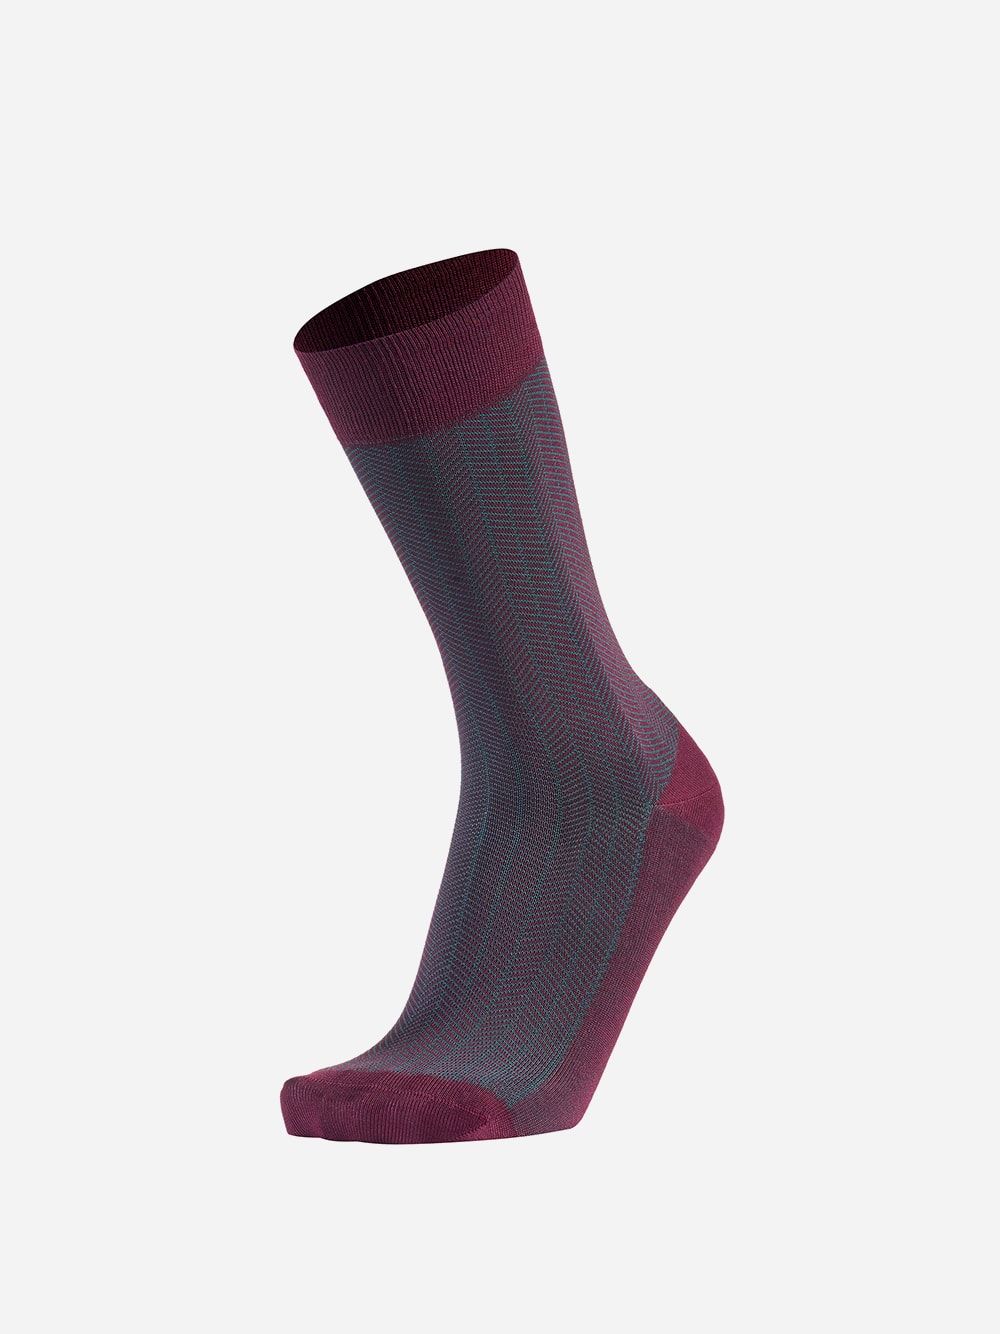 Bordeaux Socks Zigzag | Westmister 